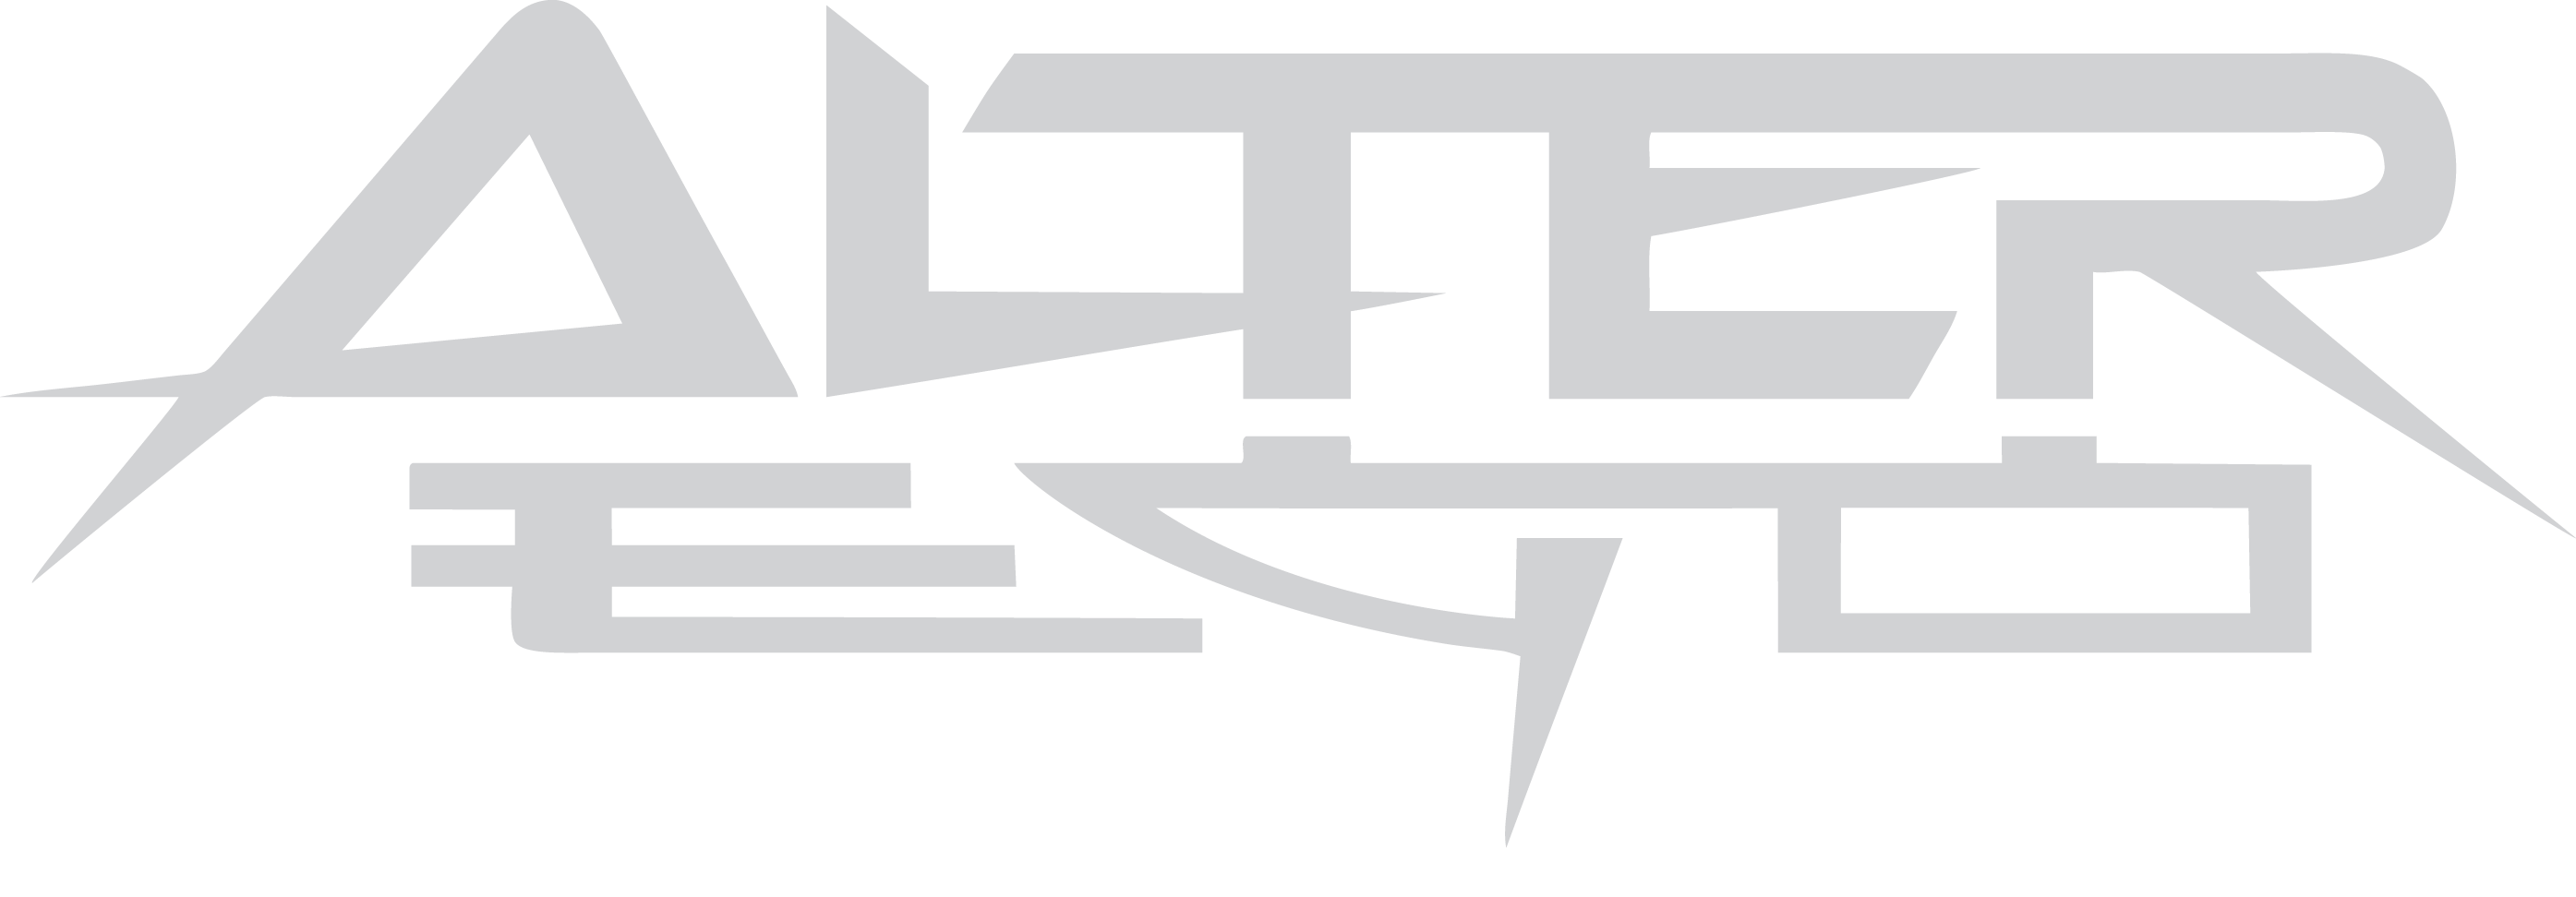 Alter Ego Logo Vector PNG - 101644